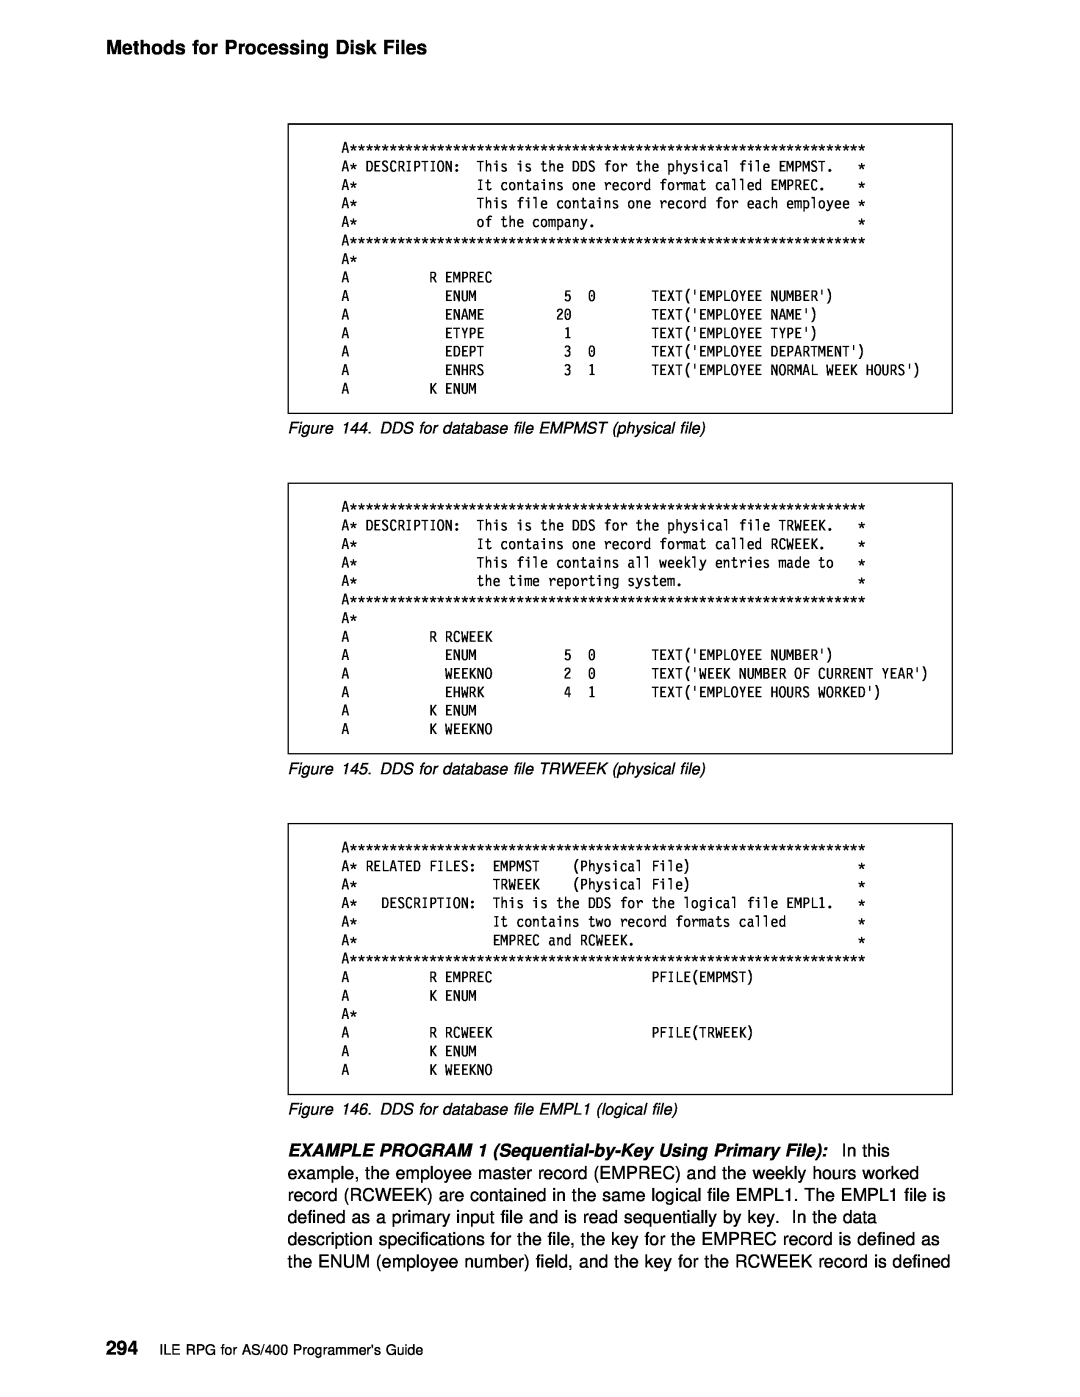 IBM AS/400 manual Methods for Processing Disk Files, DDS for database file EMPMST physical file 